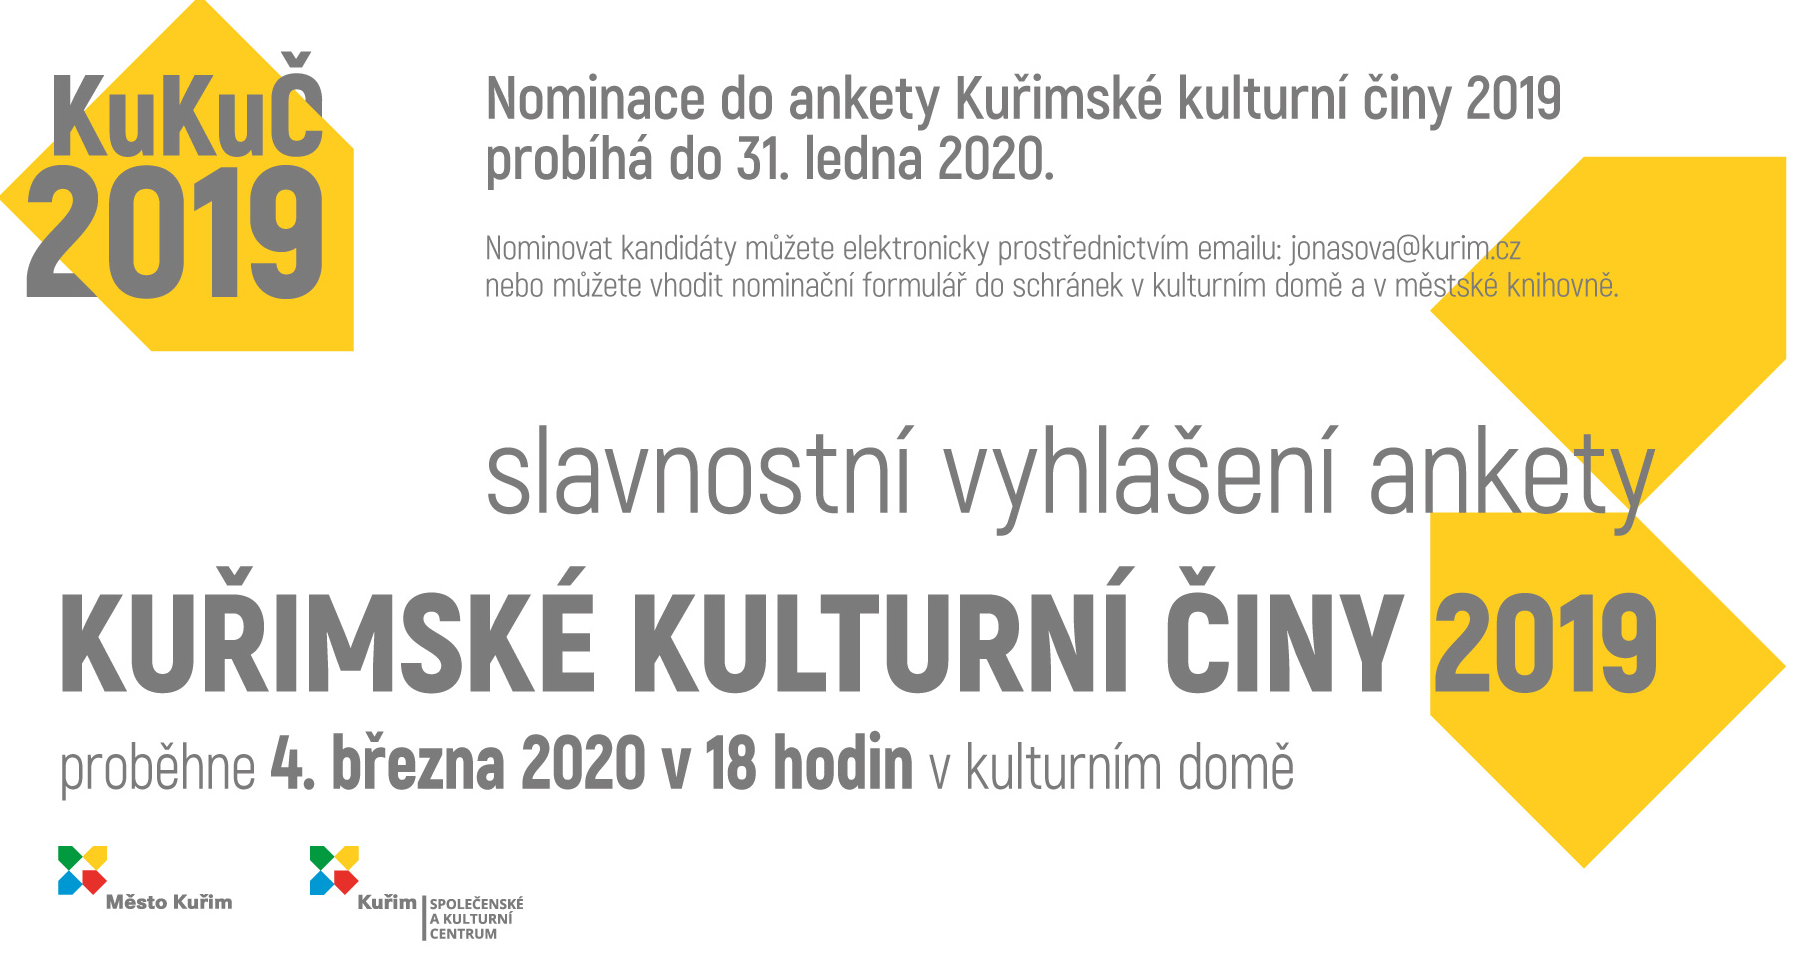 Survey of cultural events in Kuřim 2019